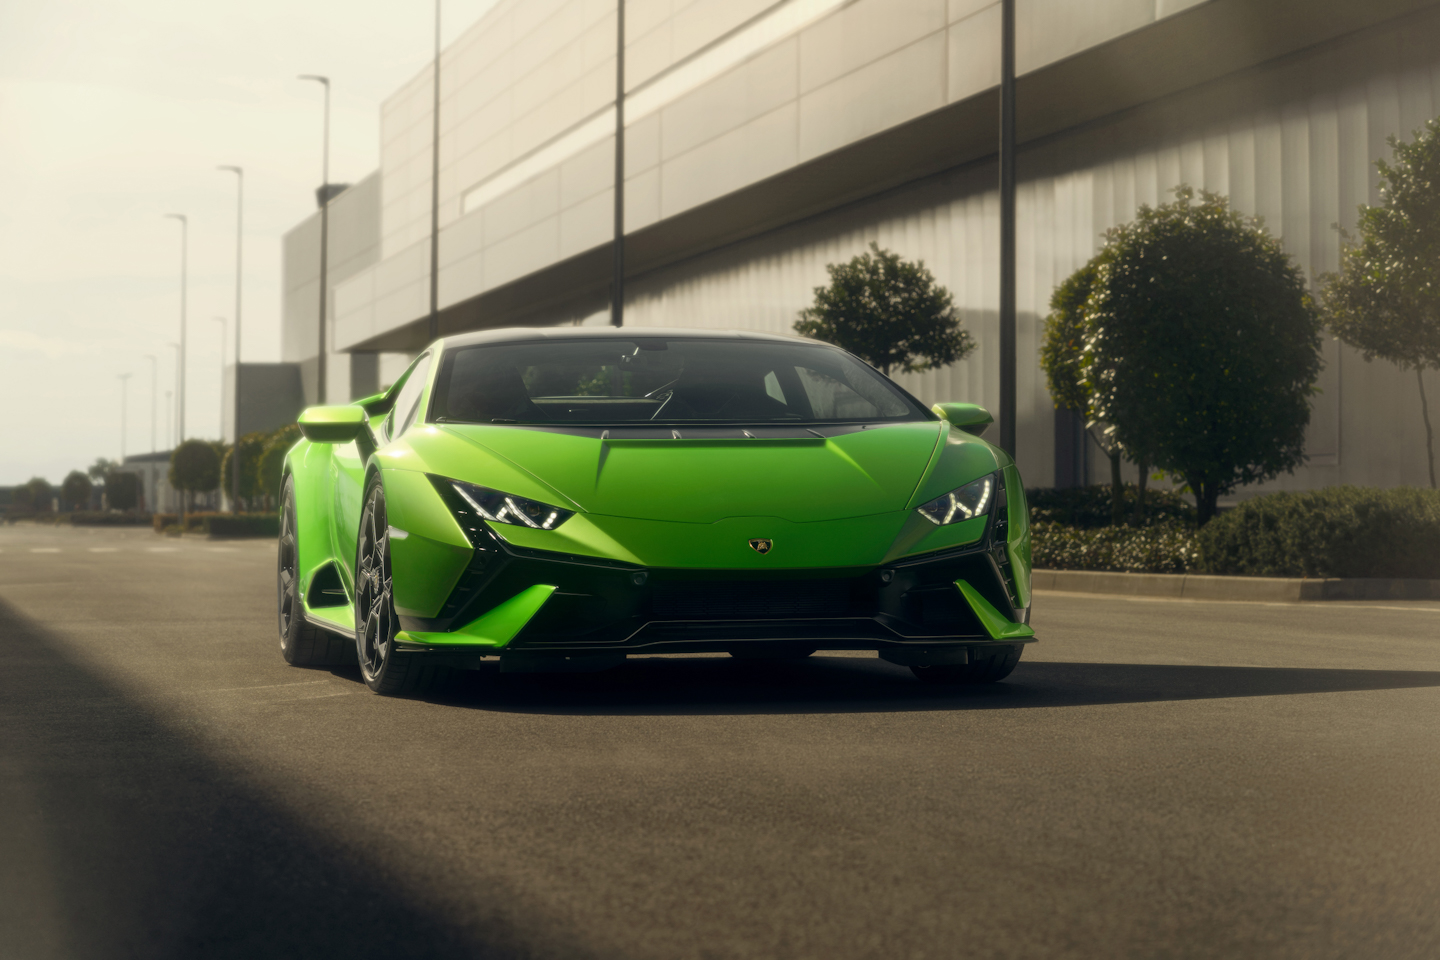 New 2022 Lamborghini Huracan Tecnica is a daily-drivable track beast